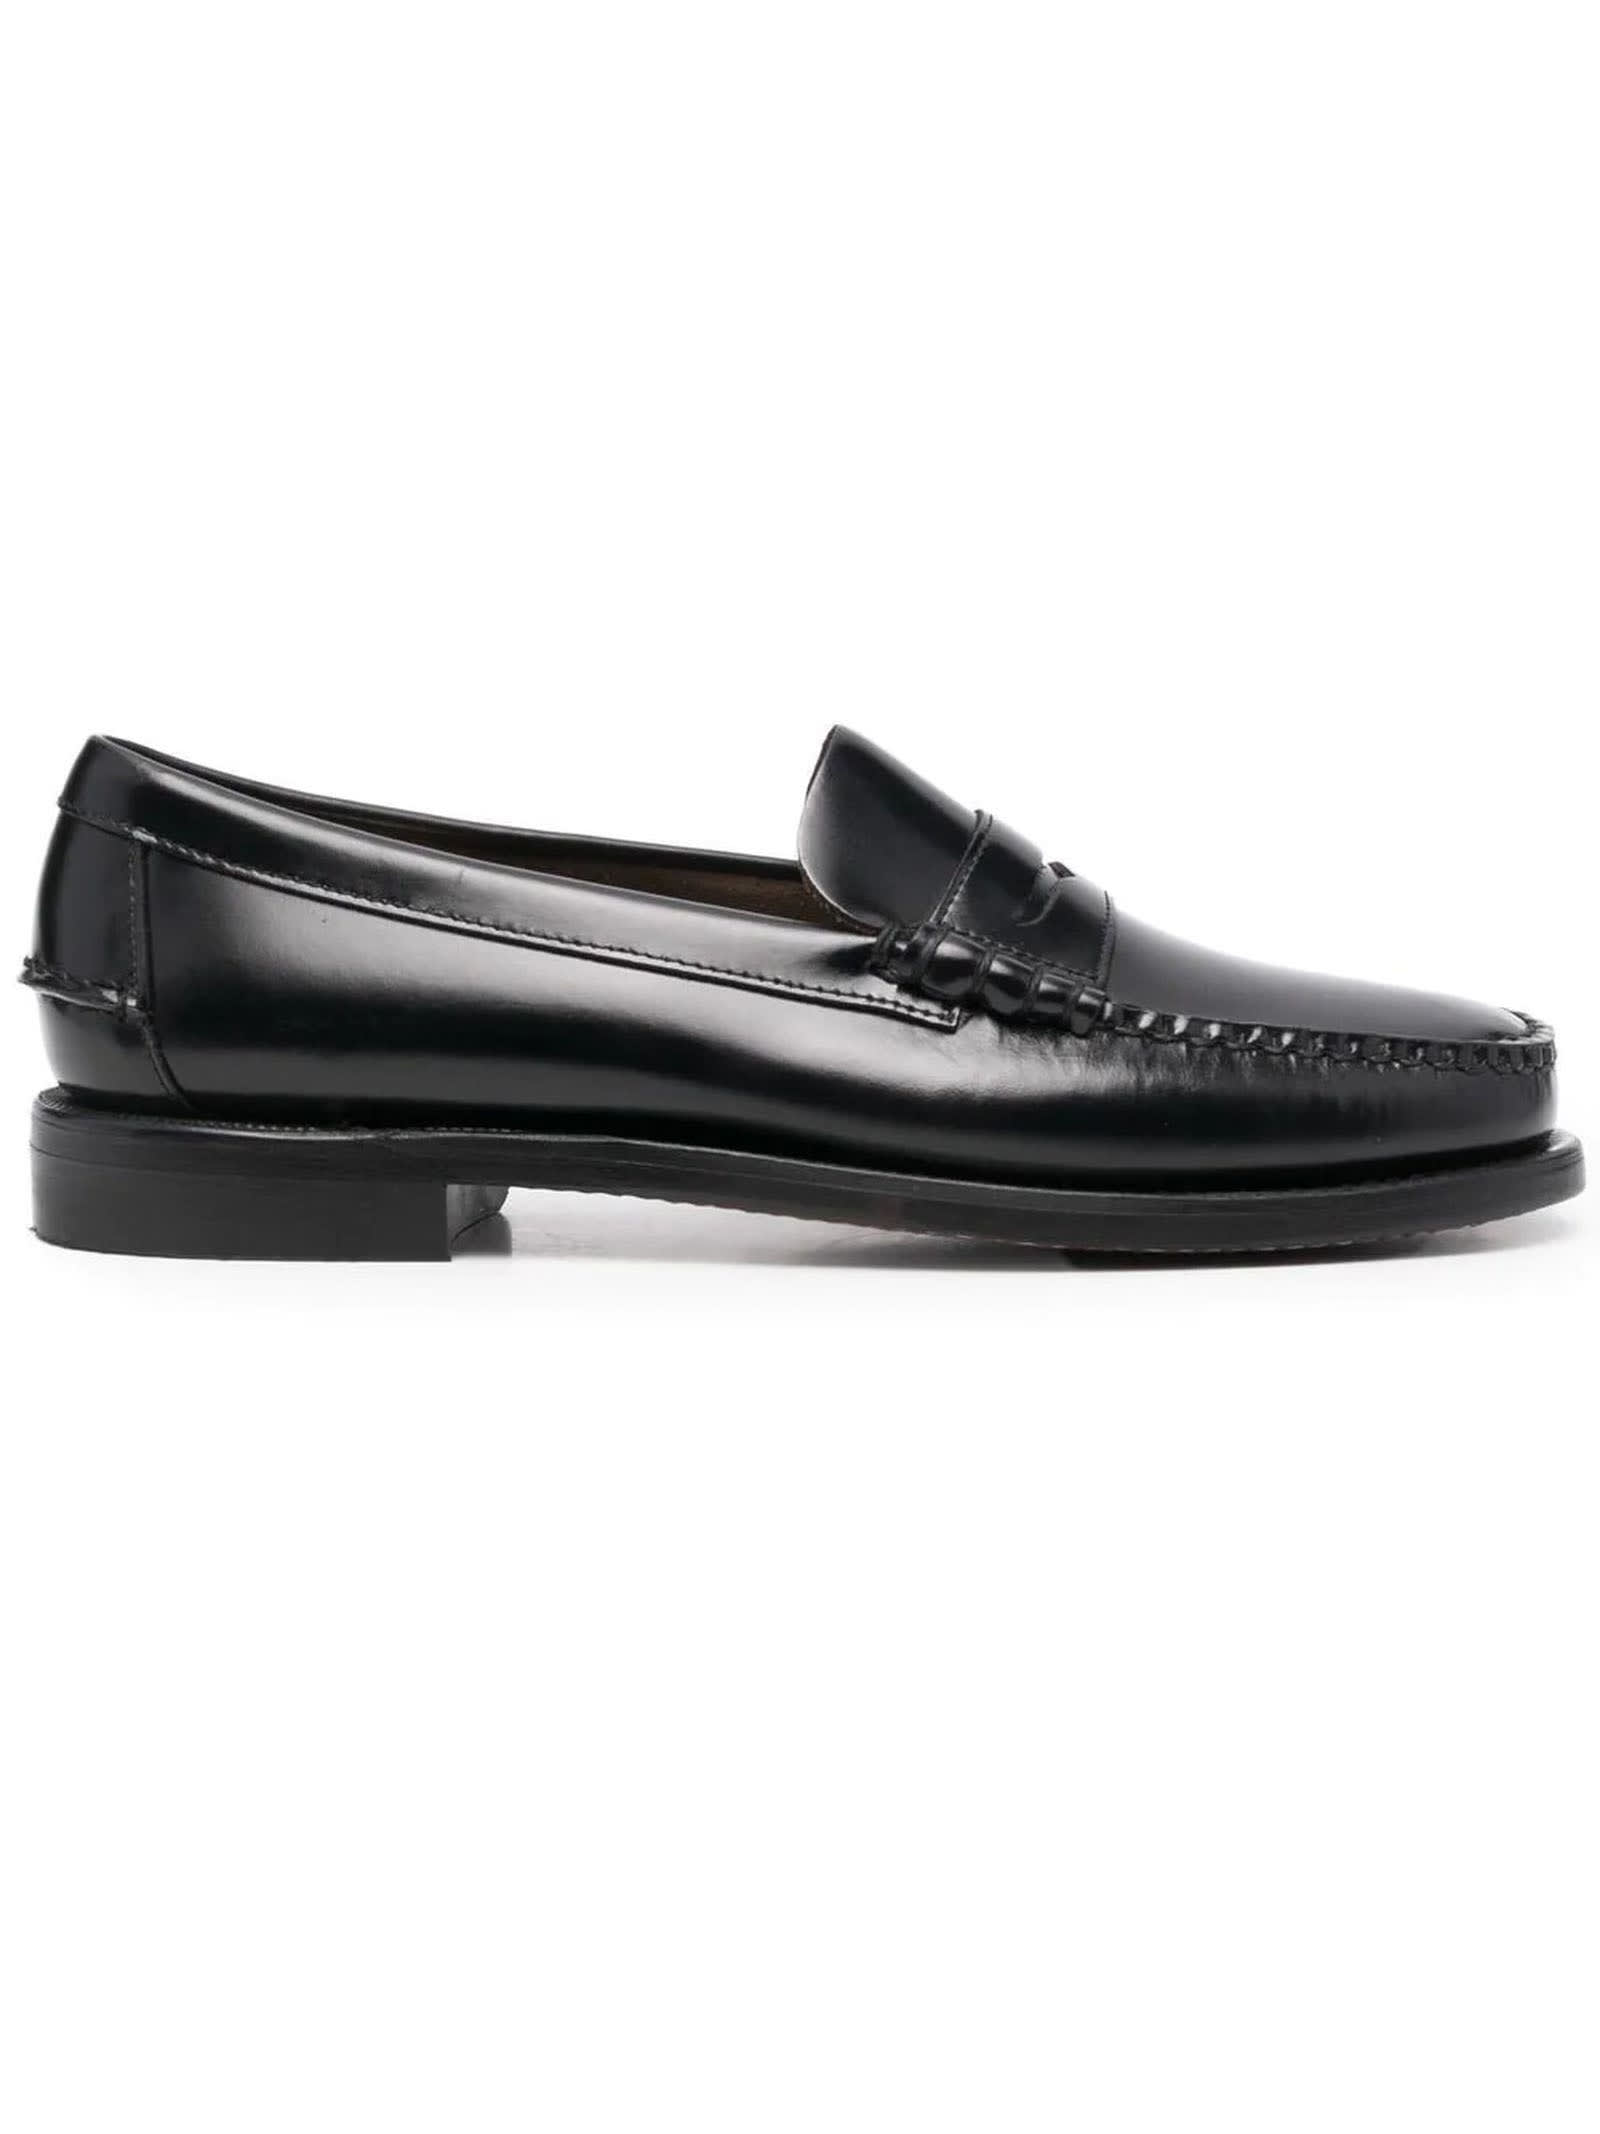 Sebago Black Leather Classic Loafers